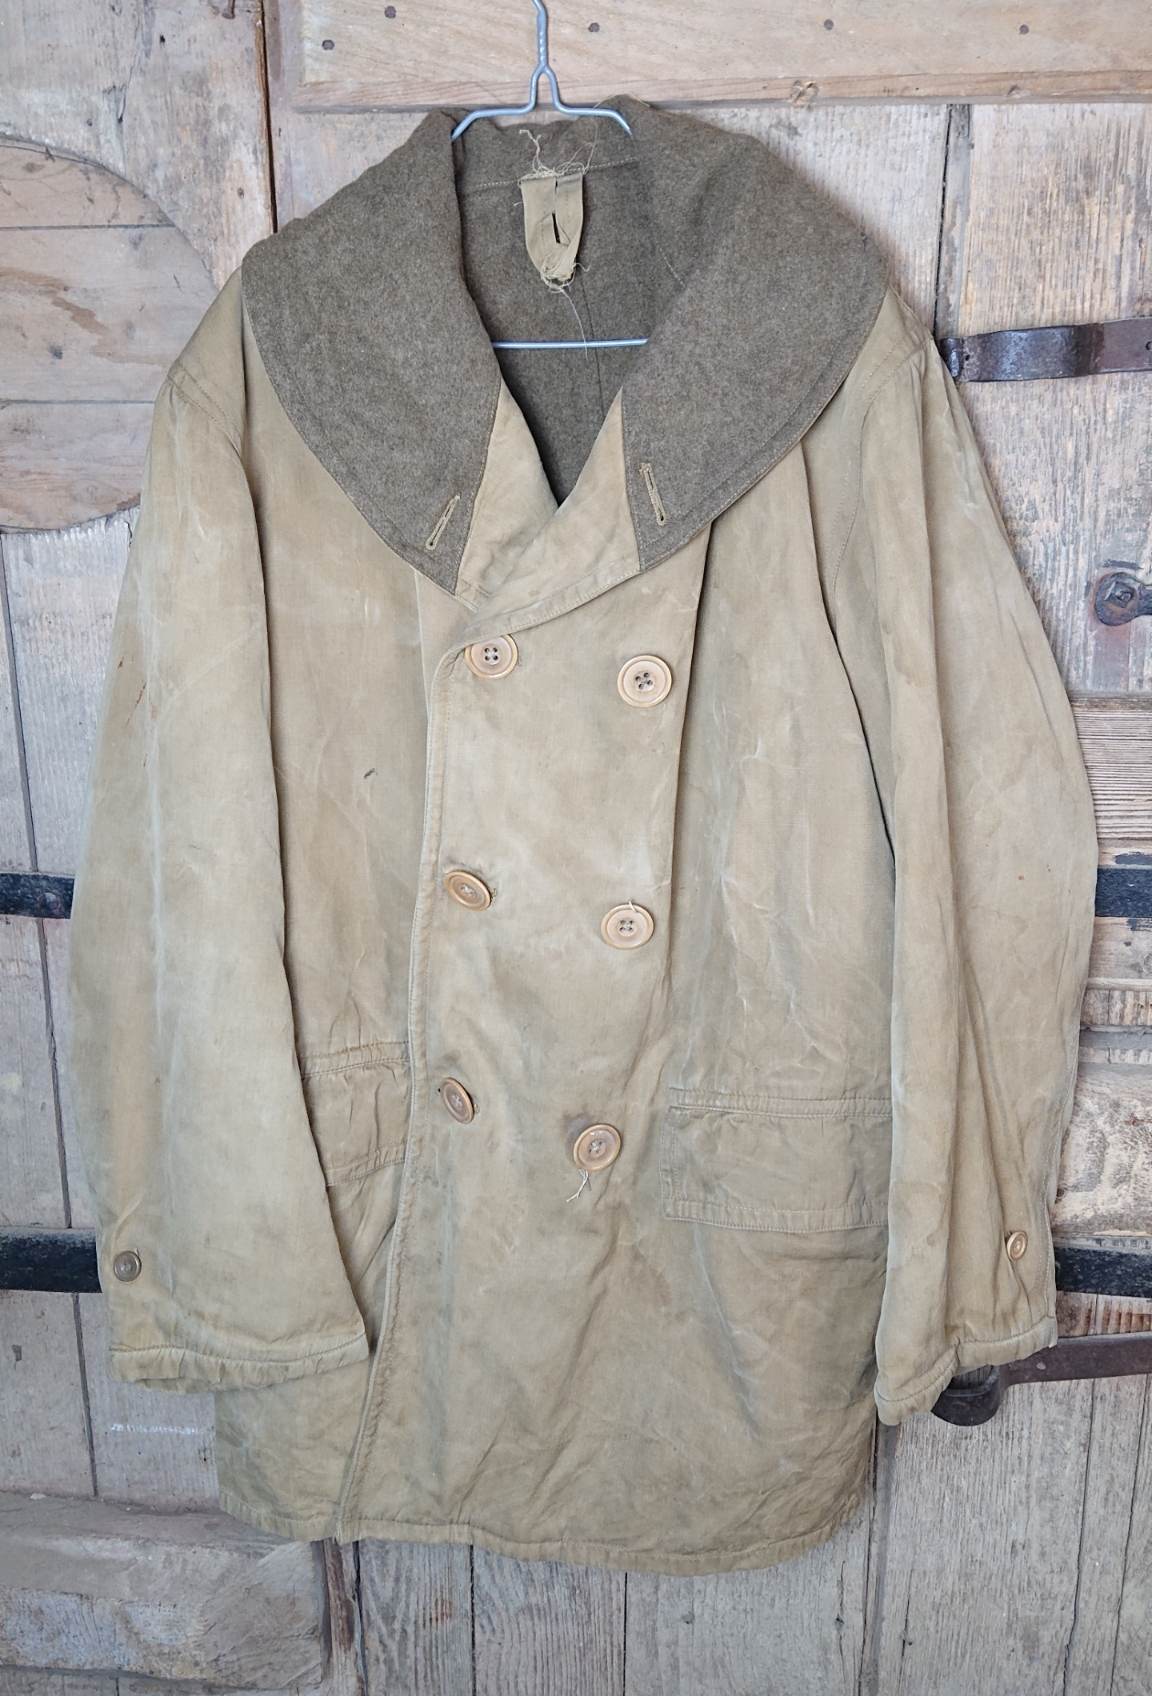 militaria : Veste Mackinaw US ww2 British made / Mackinaw jacket US 1943